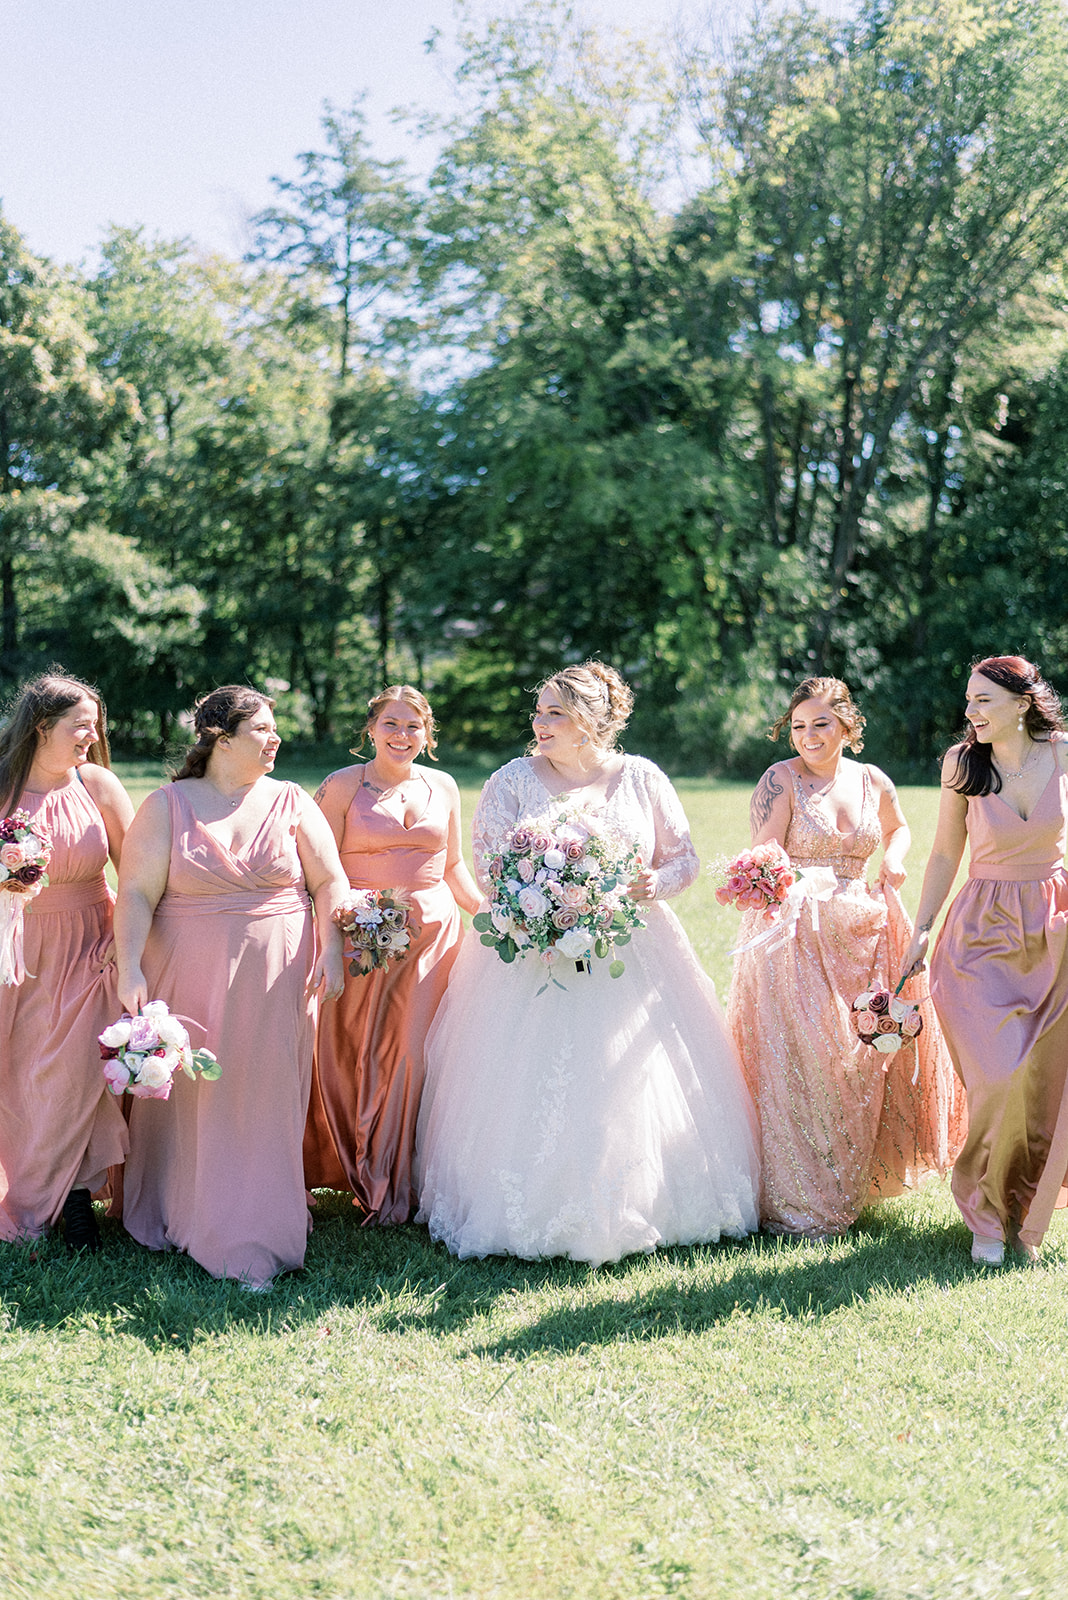 Pennsylvania wedding photographer captures bride with bridesmaids wearing pink dresses